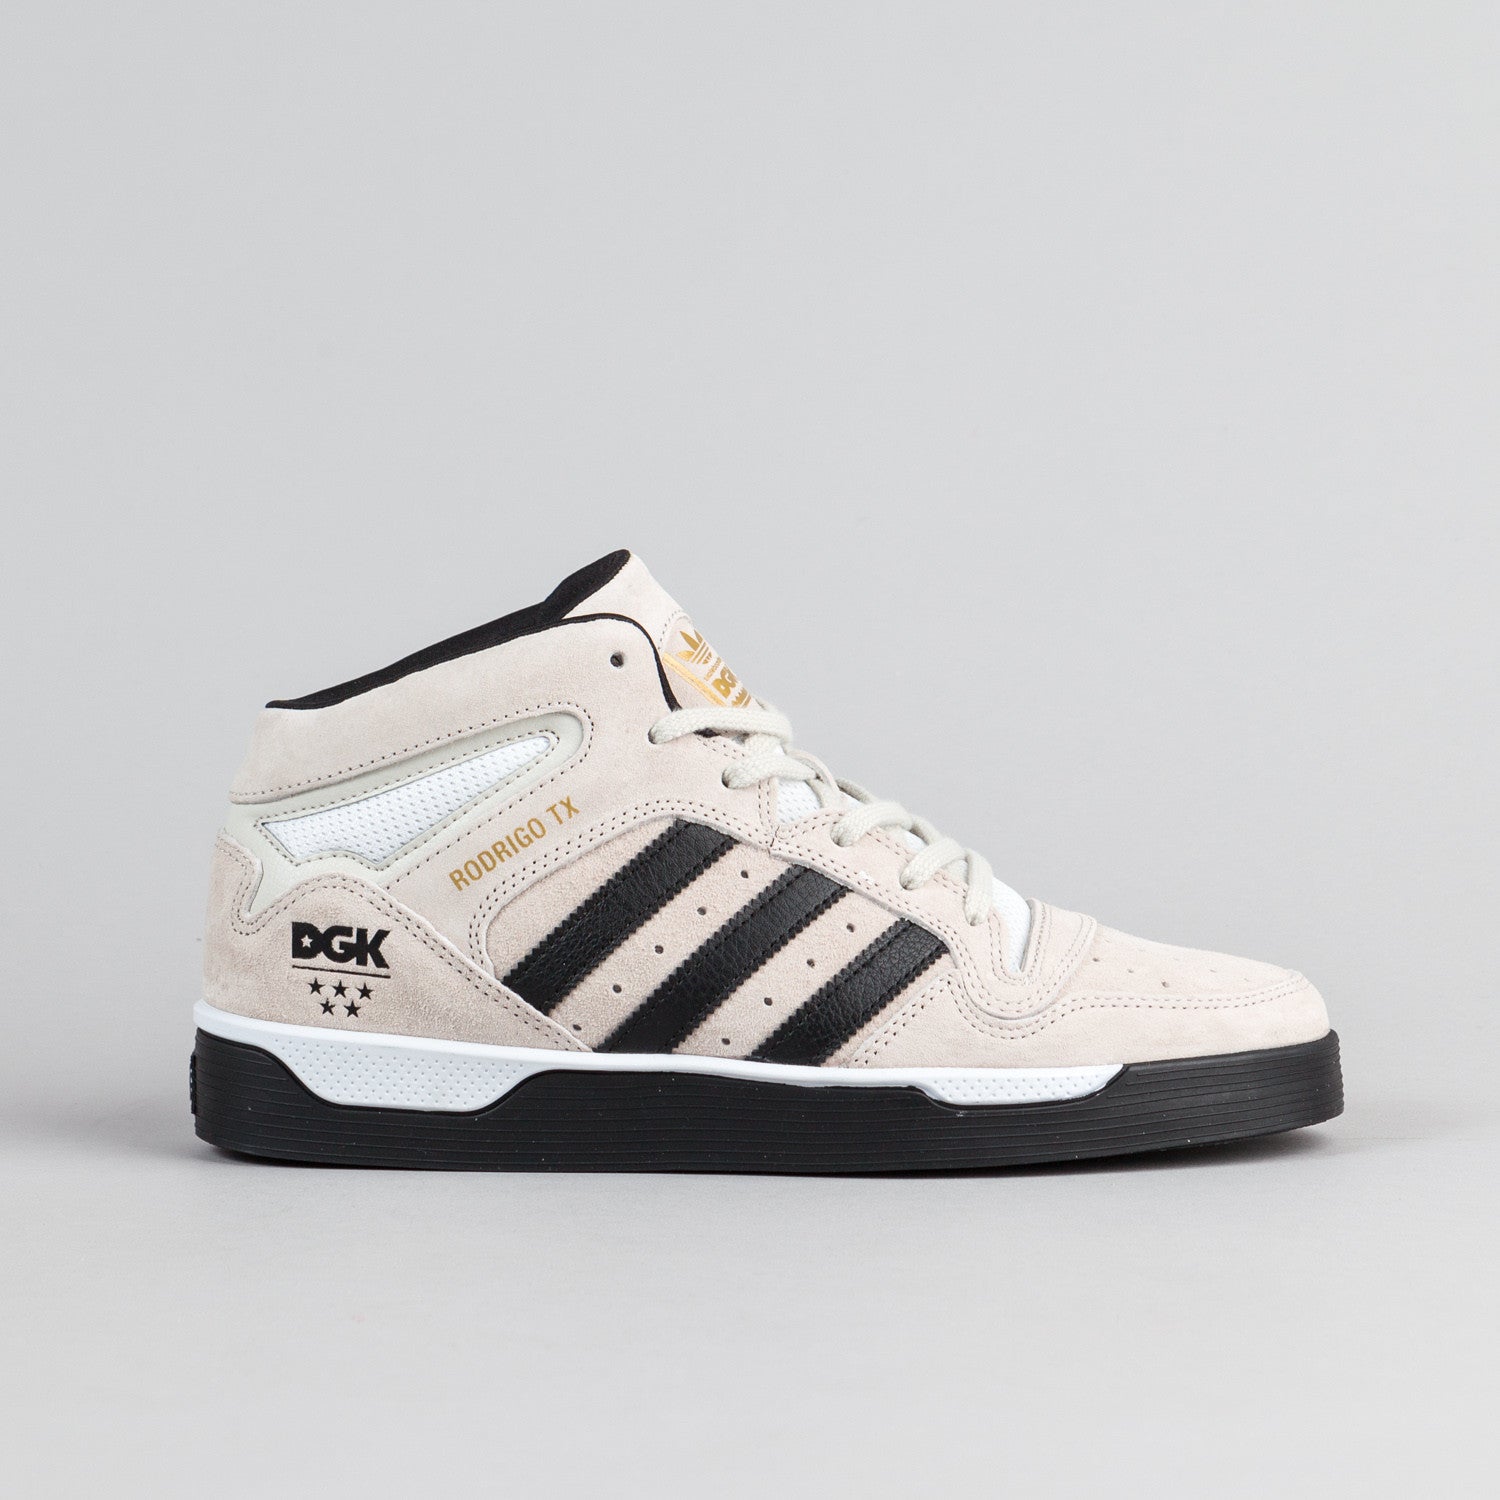 Adidas x DGK Locator Mid Shoes - Mist Stone / Core Black / White | Flatspot